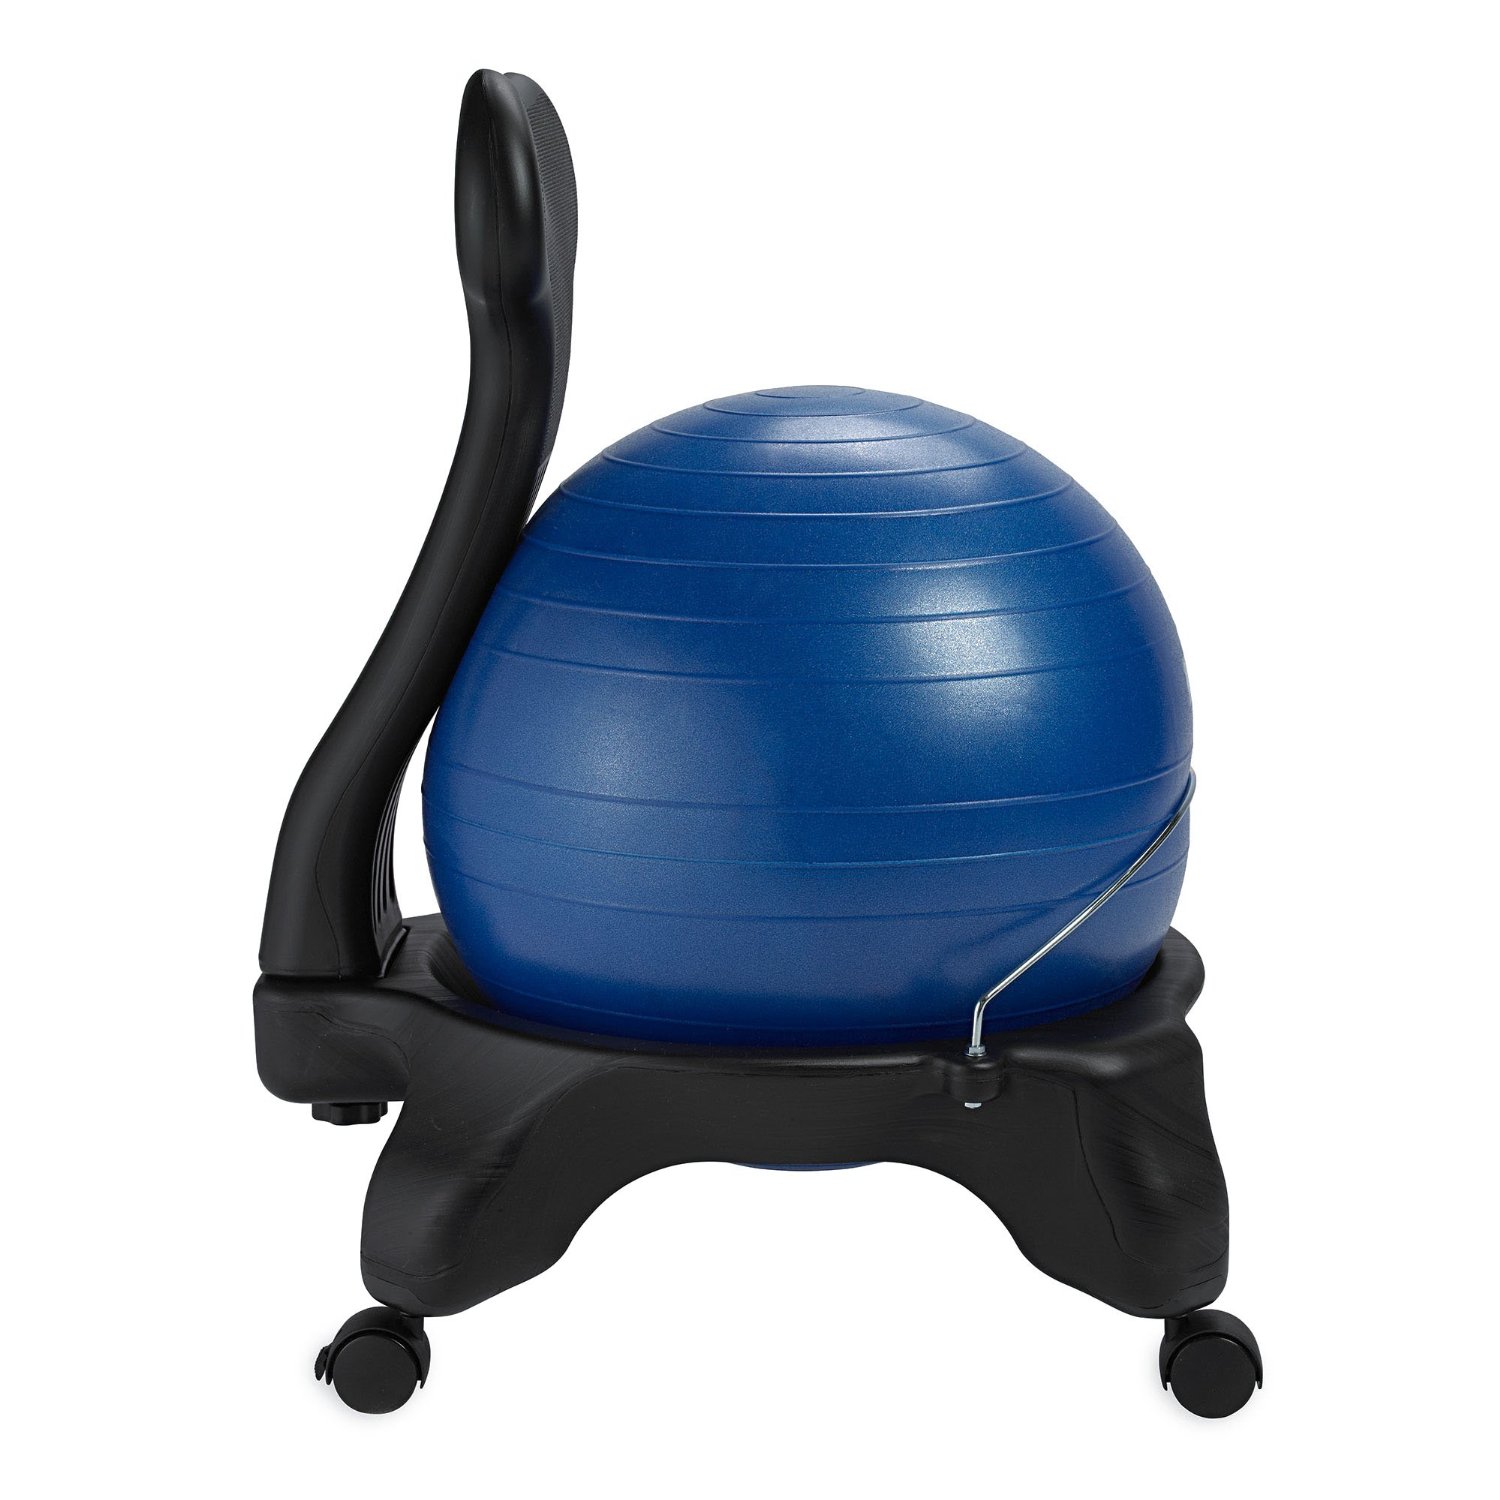 Gaiam Balance Ball Chairs – Just $54.99!